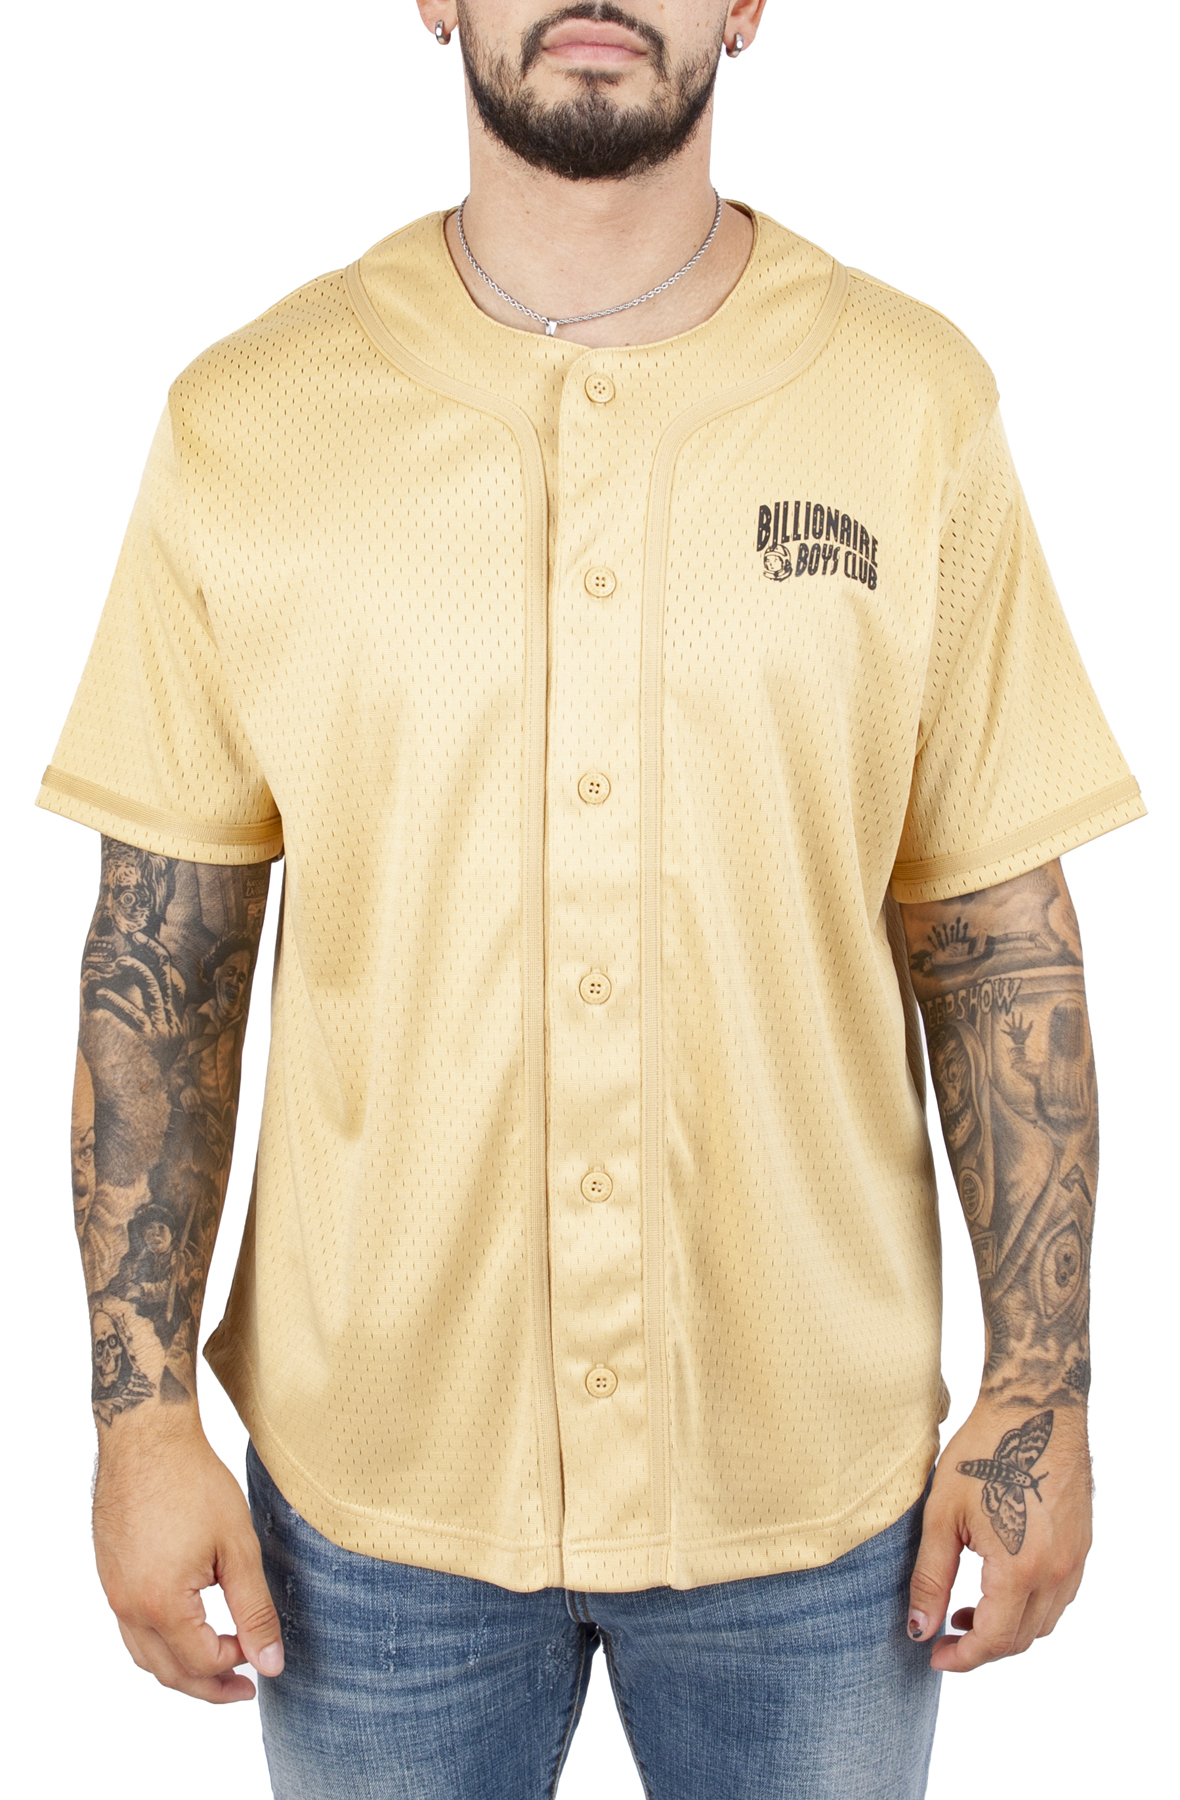 Billionaire Boys Club Bb Cadet Mesh Short Sleeve Button-Up Baseball Jersey New Wheat